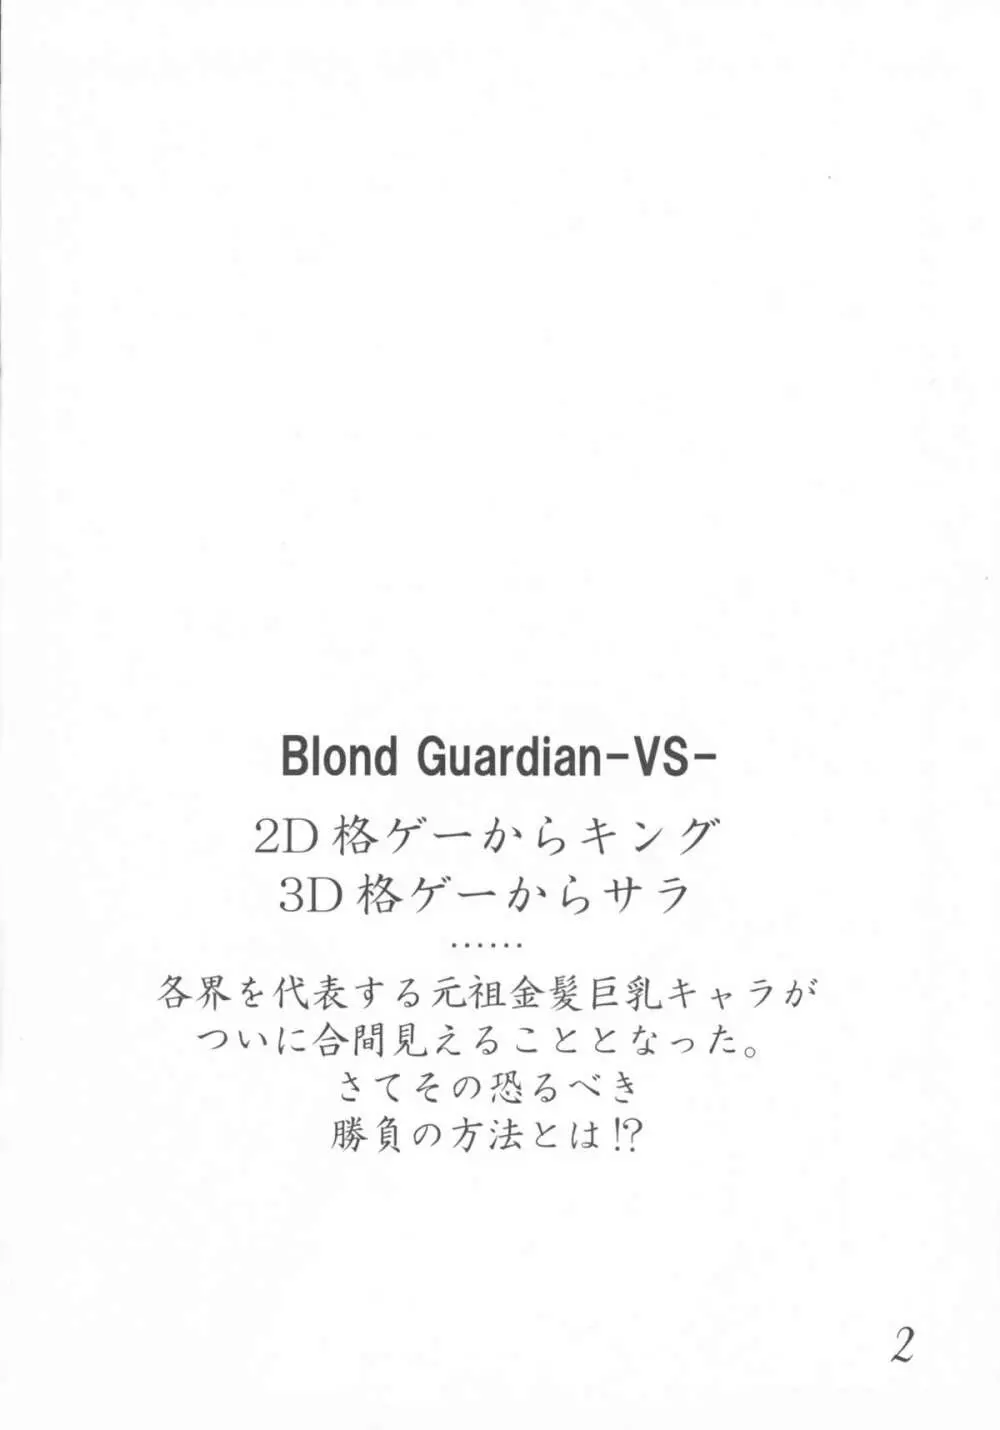 Blond Guardian -VS- - page2